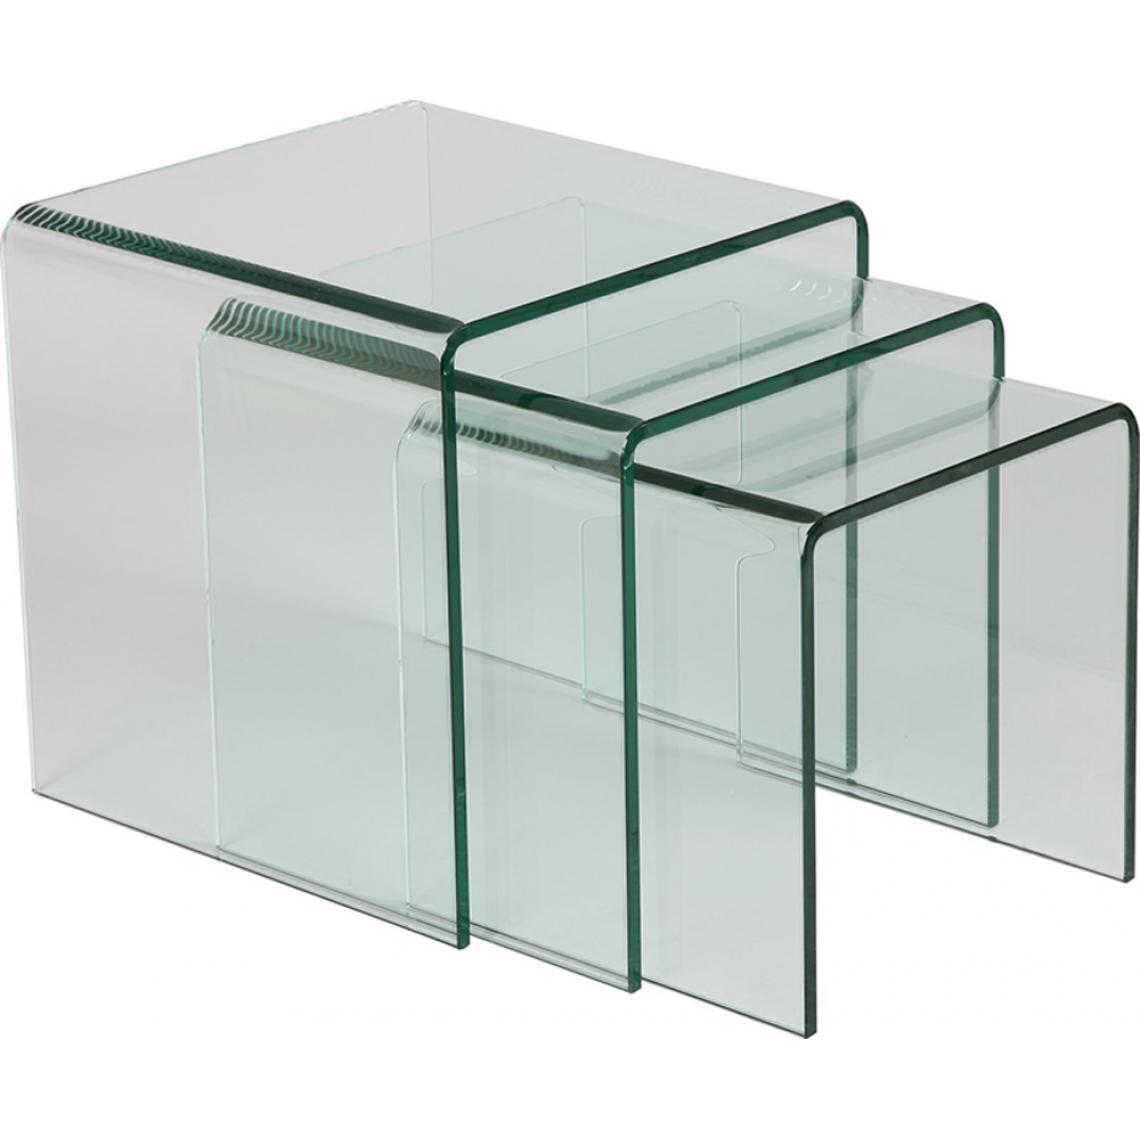 Pegane - Tables gigogne en verre - Tables basses